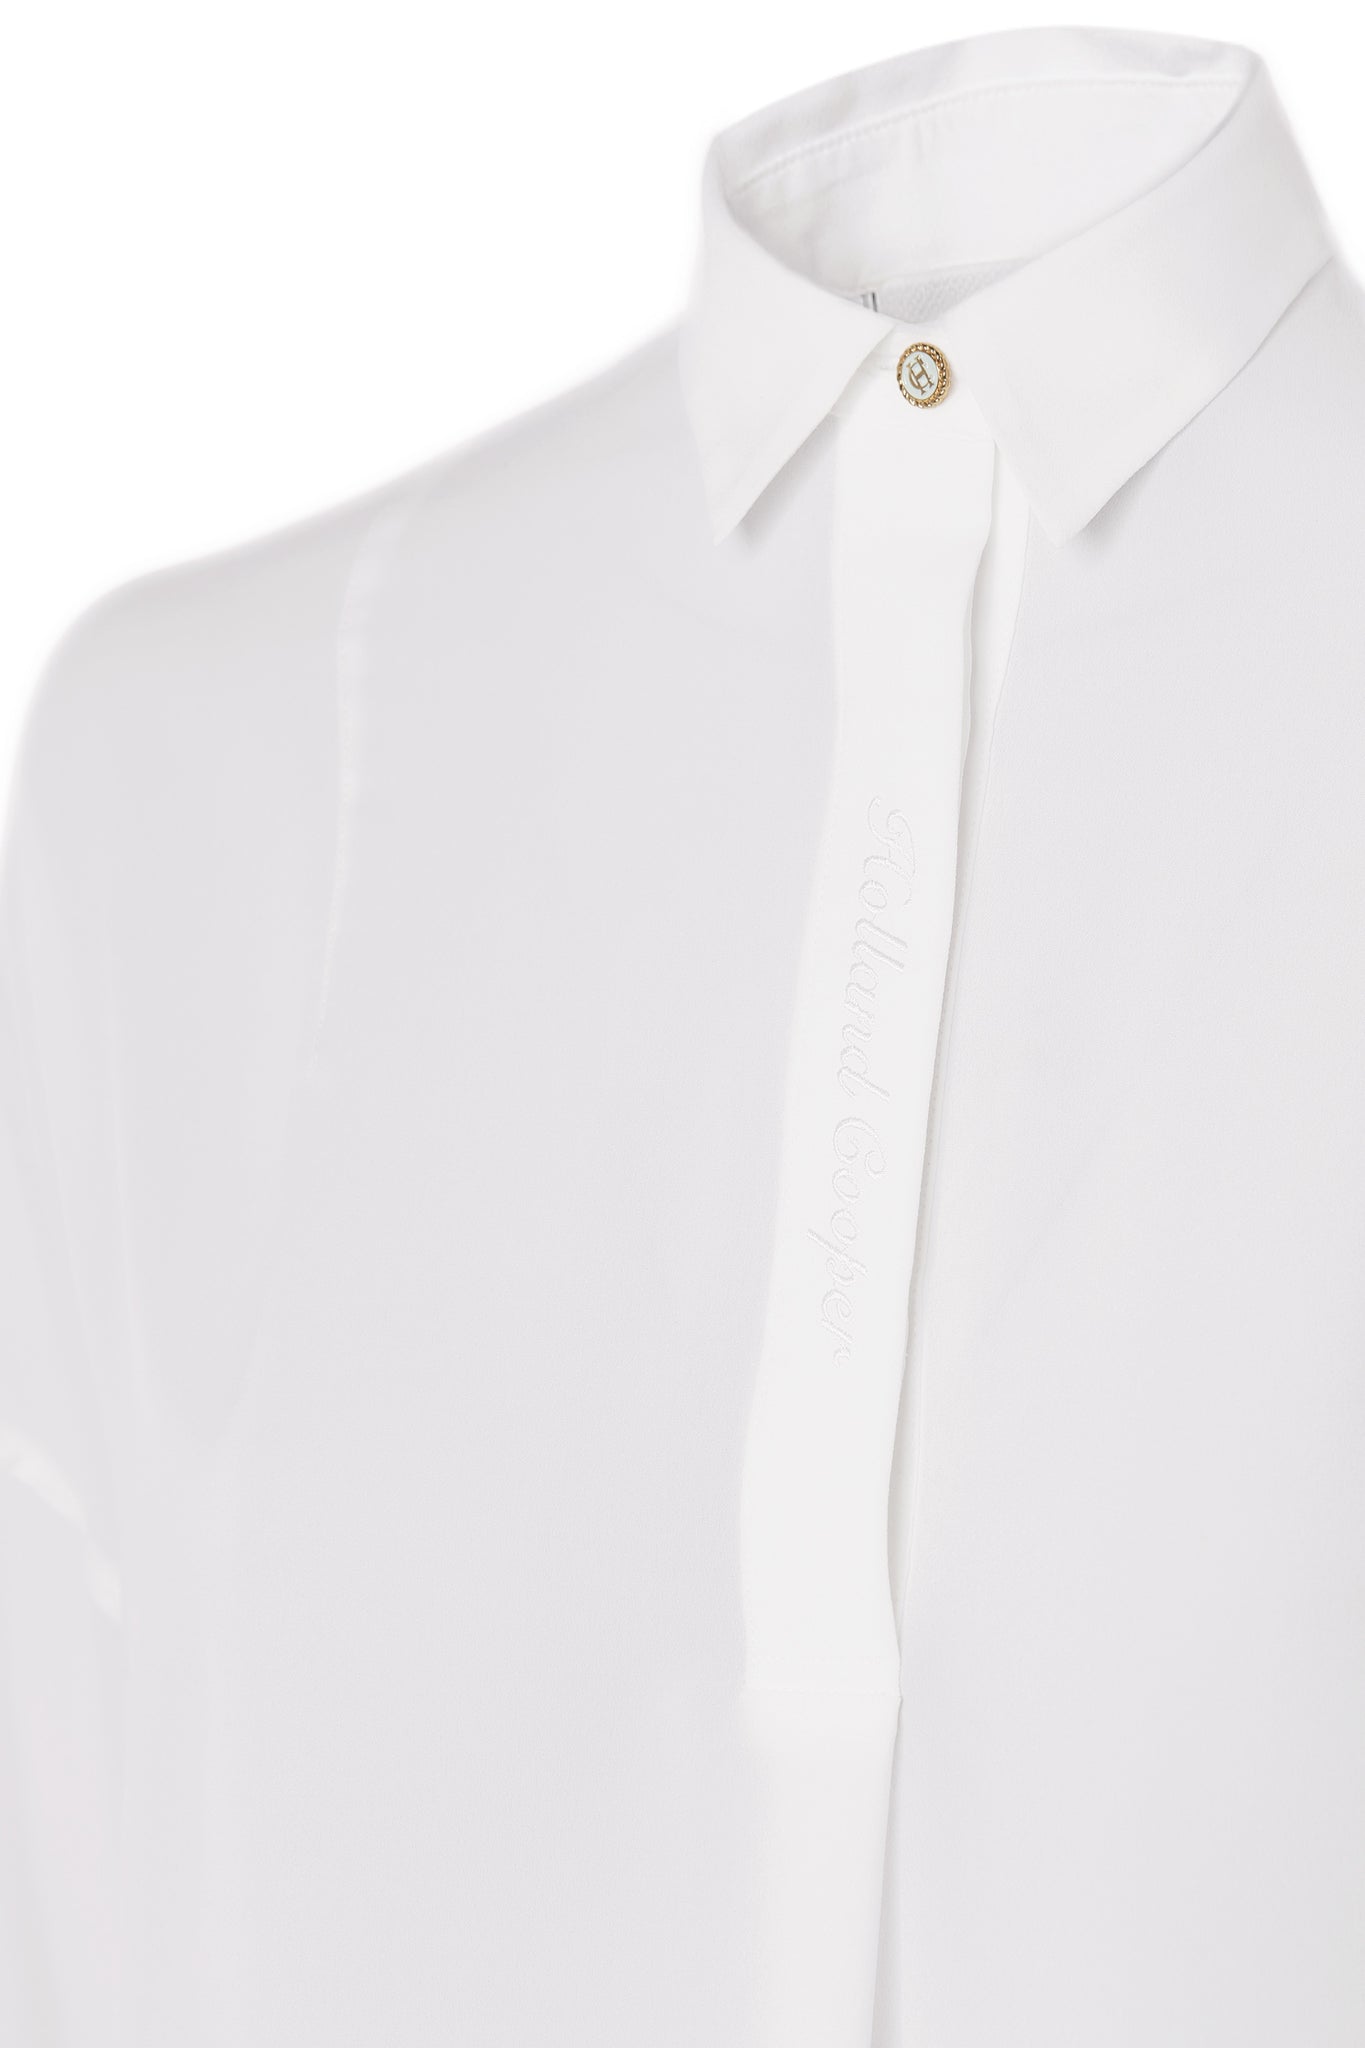 Cameron Shirt (White)